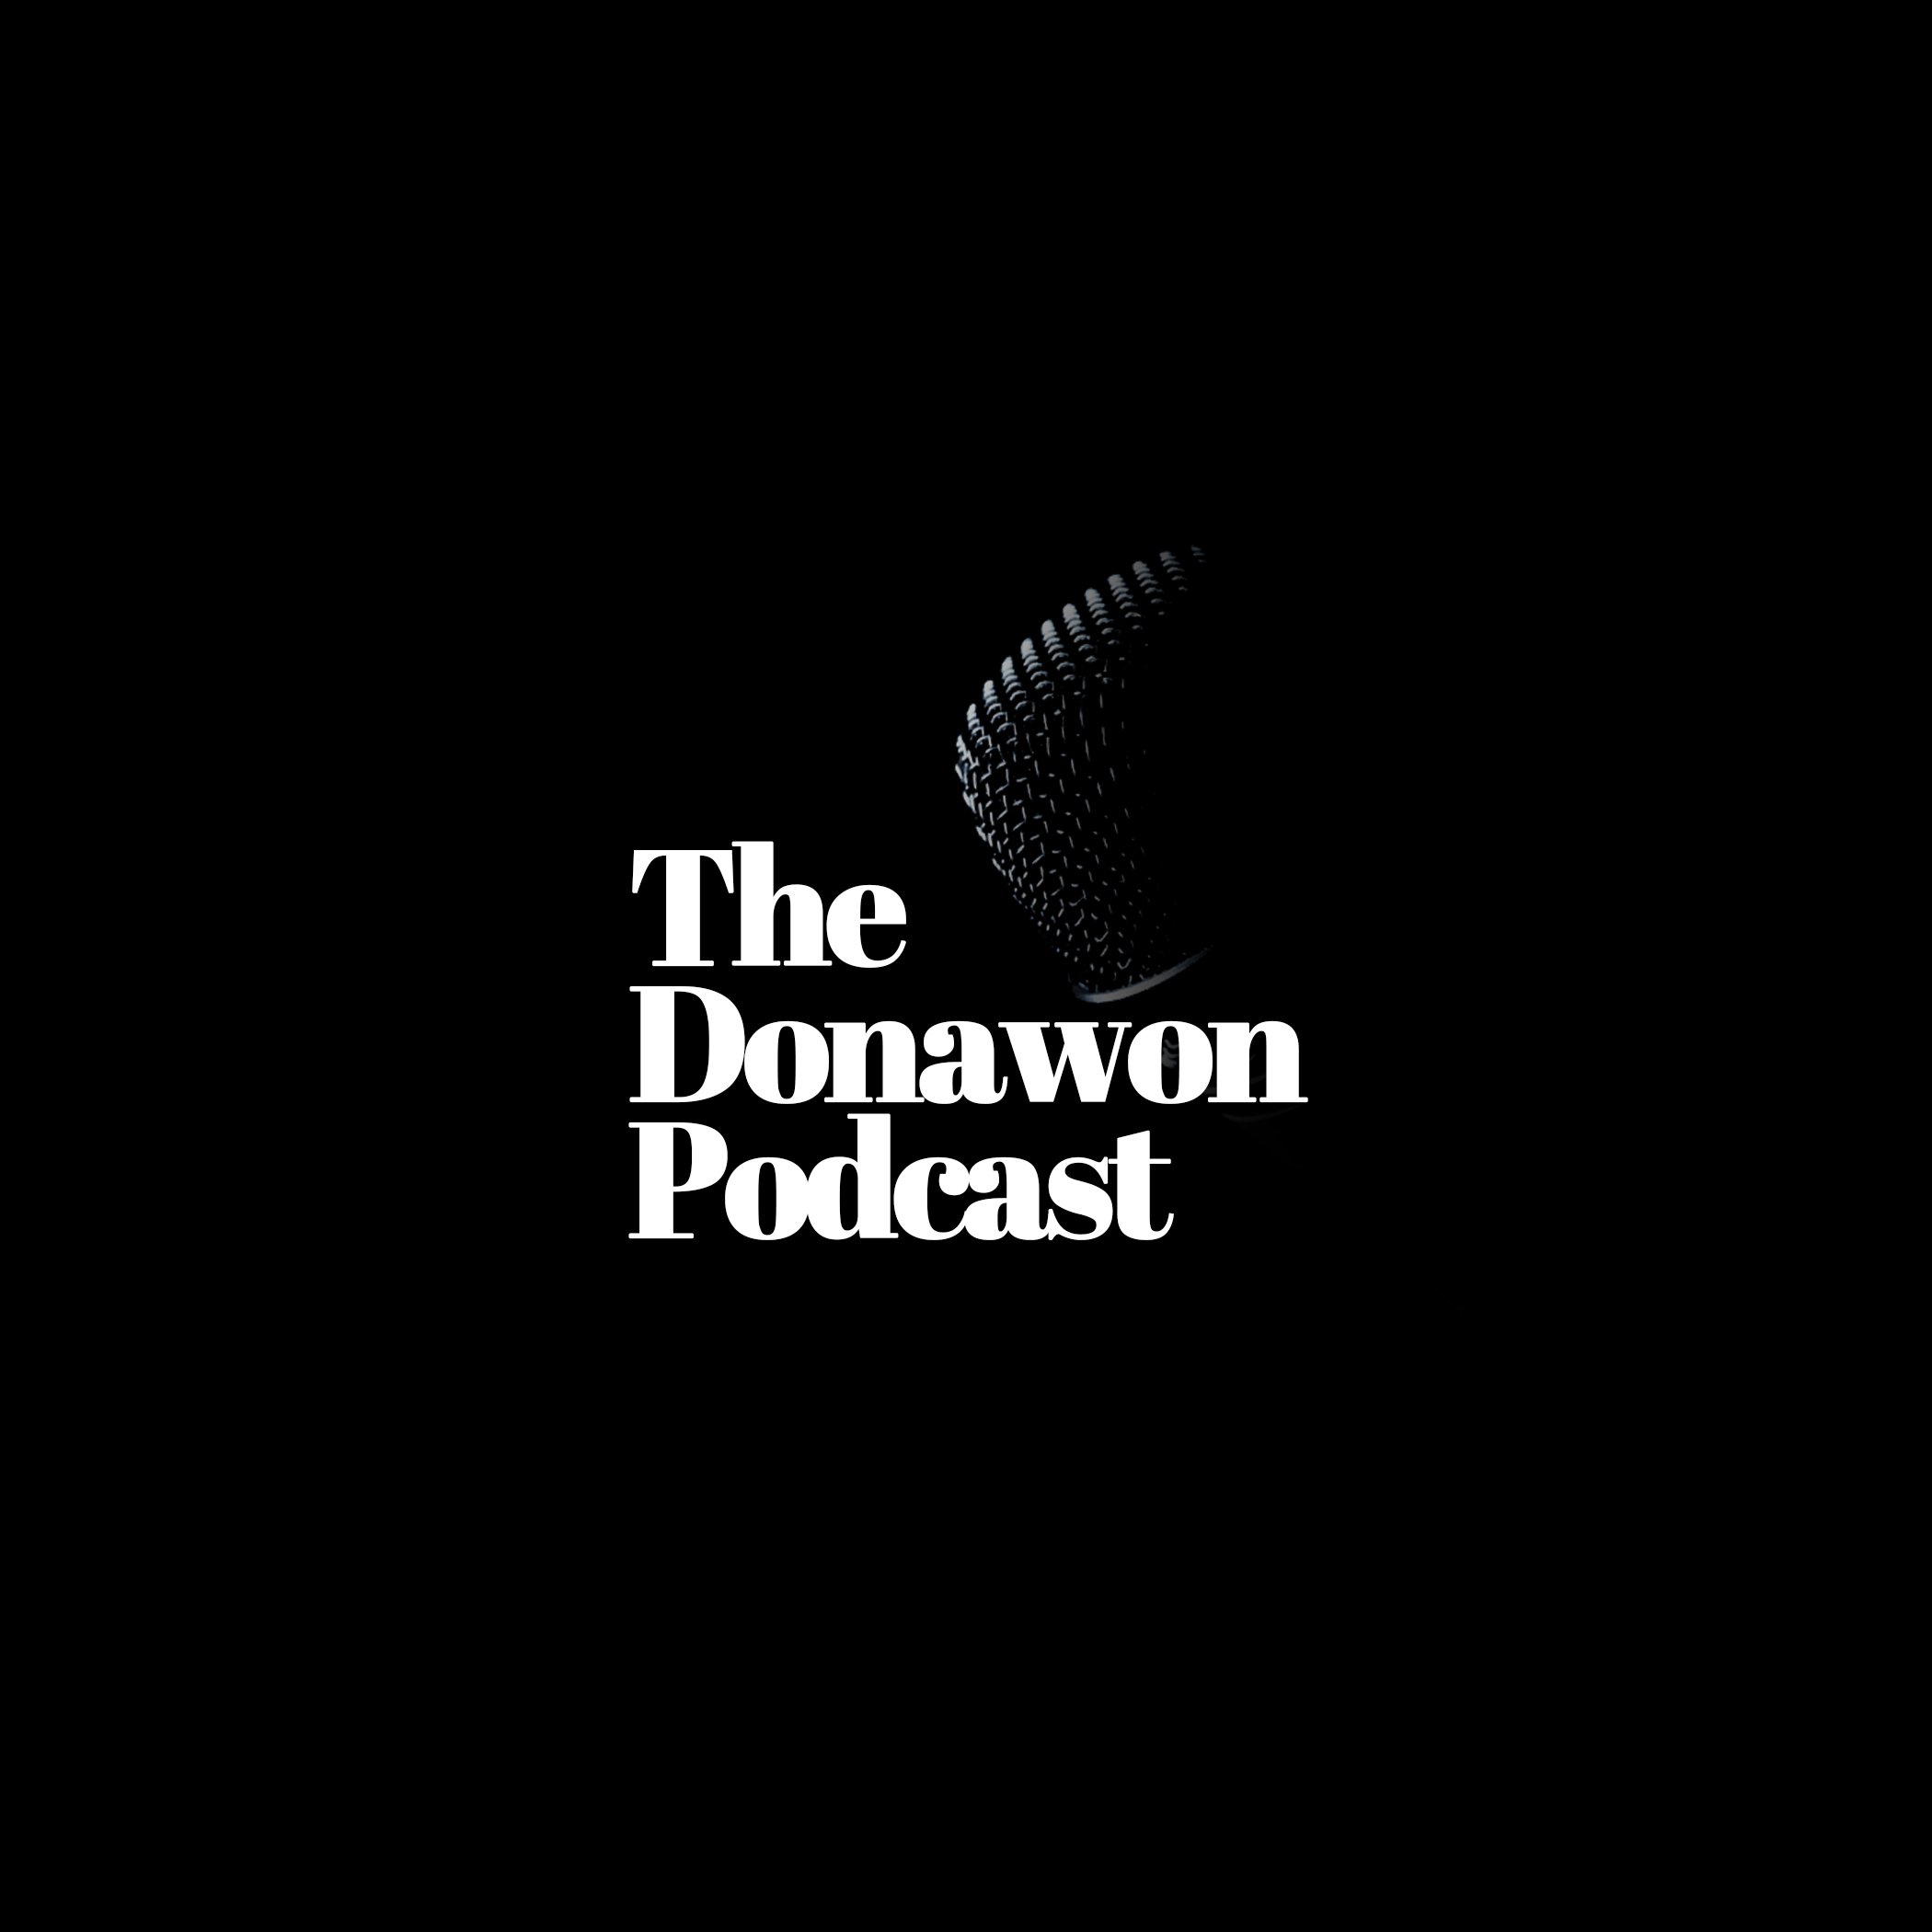 The Donawon Podcast